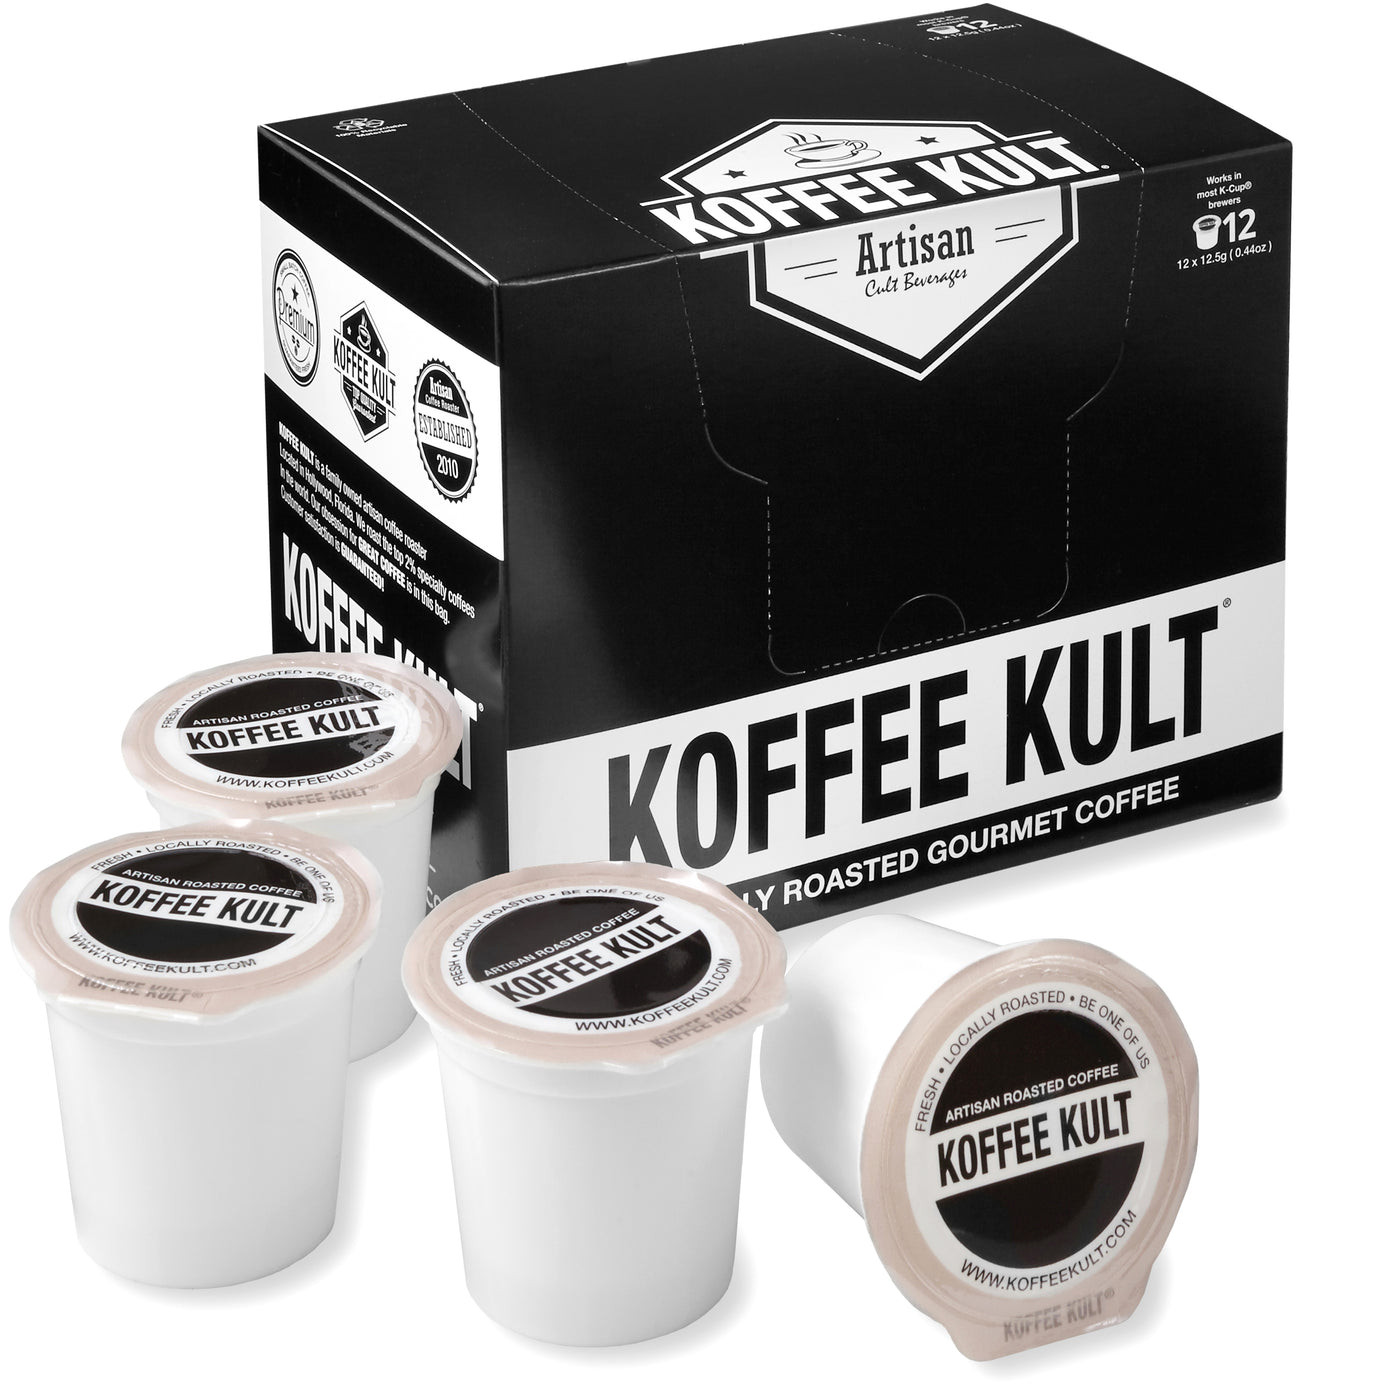 Original Koffee Kult Colombia Decaf coffee in single serve cups